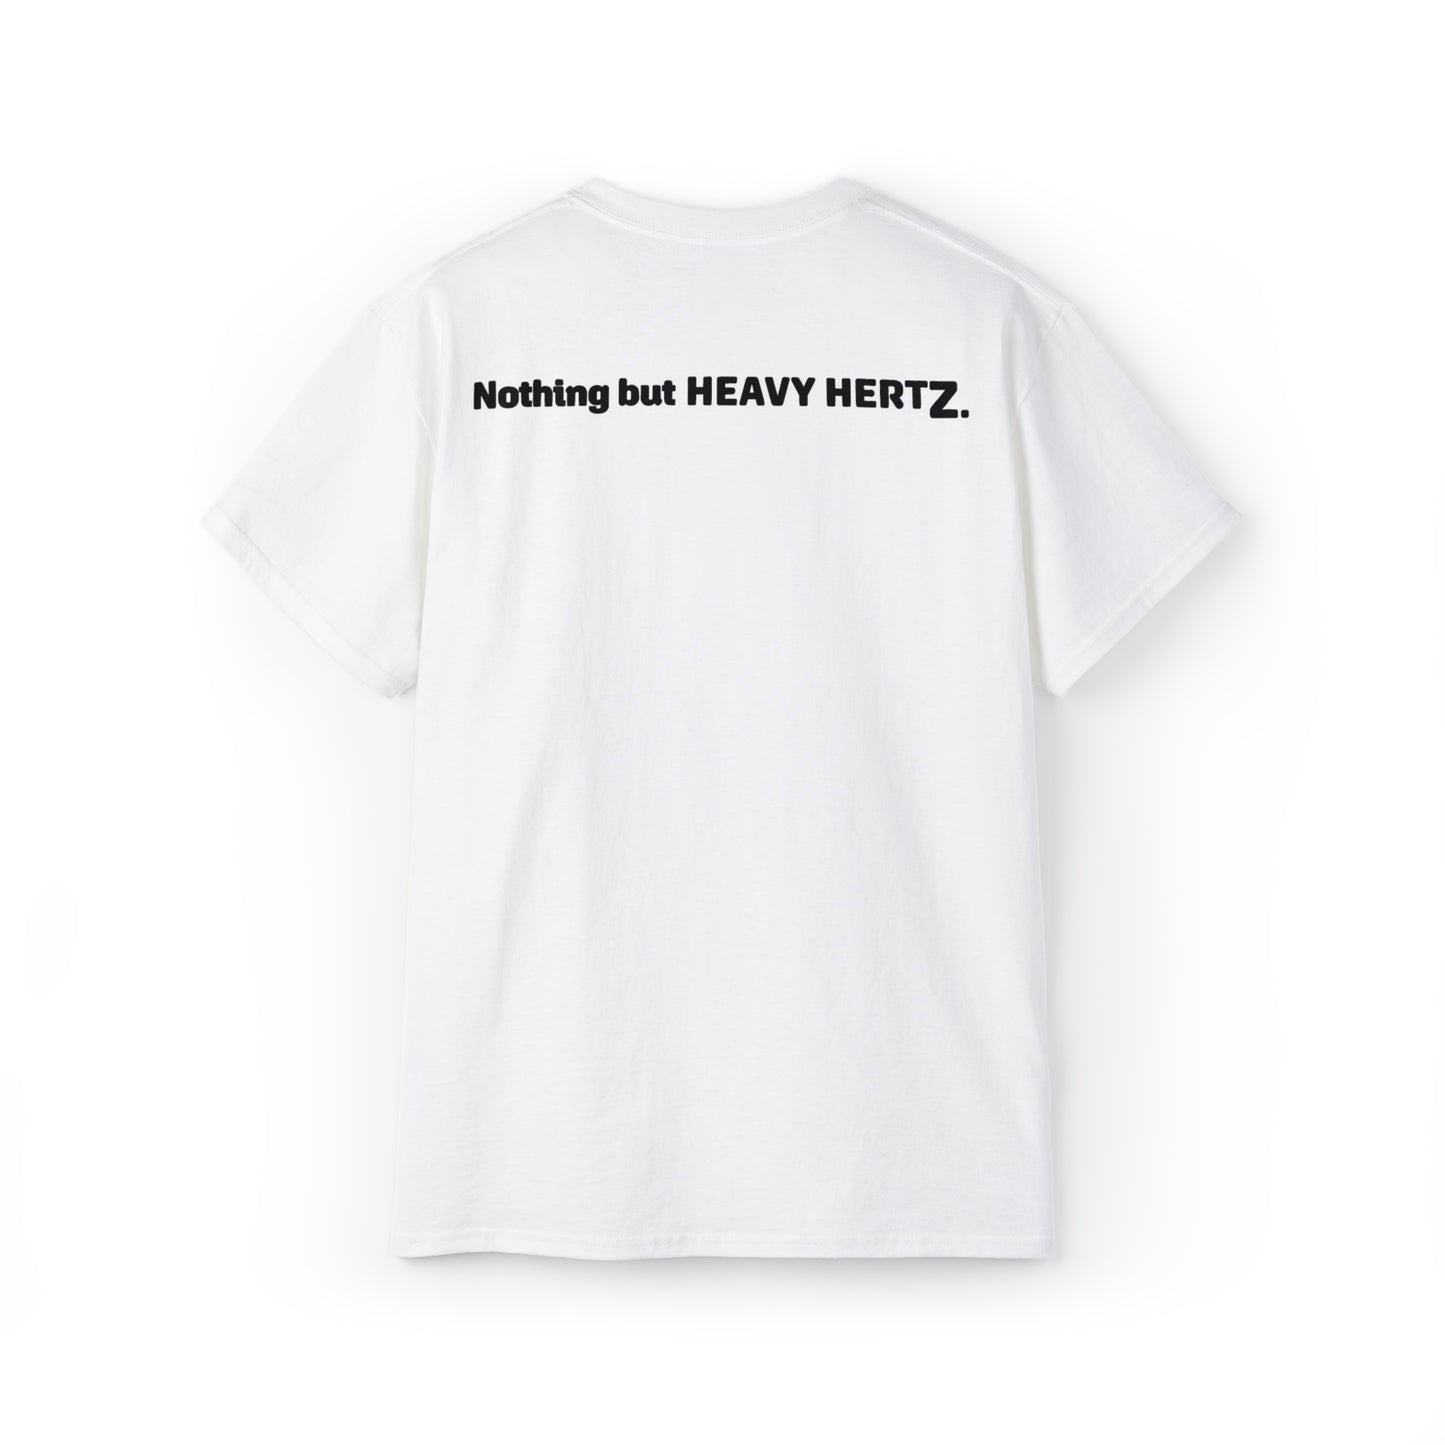 Nothing but heavy hertz® Shirt